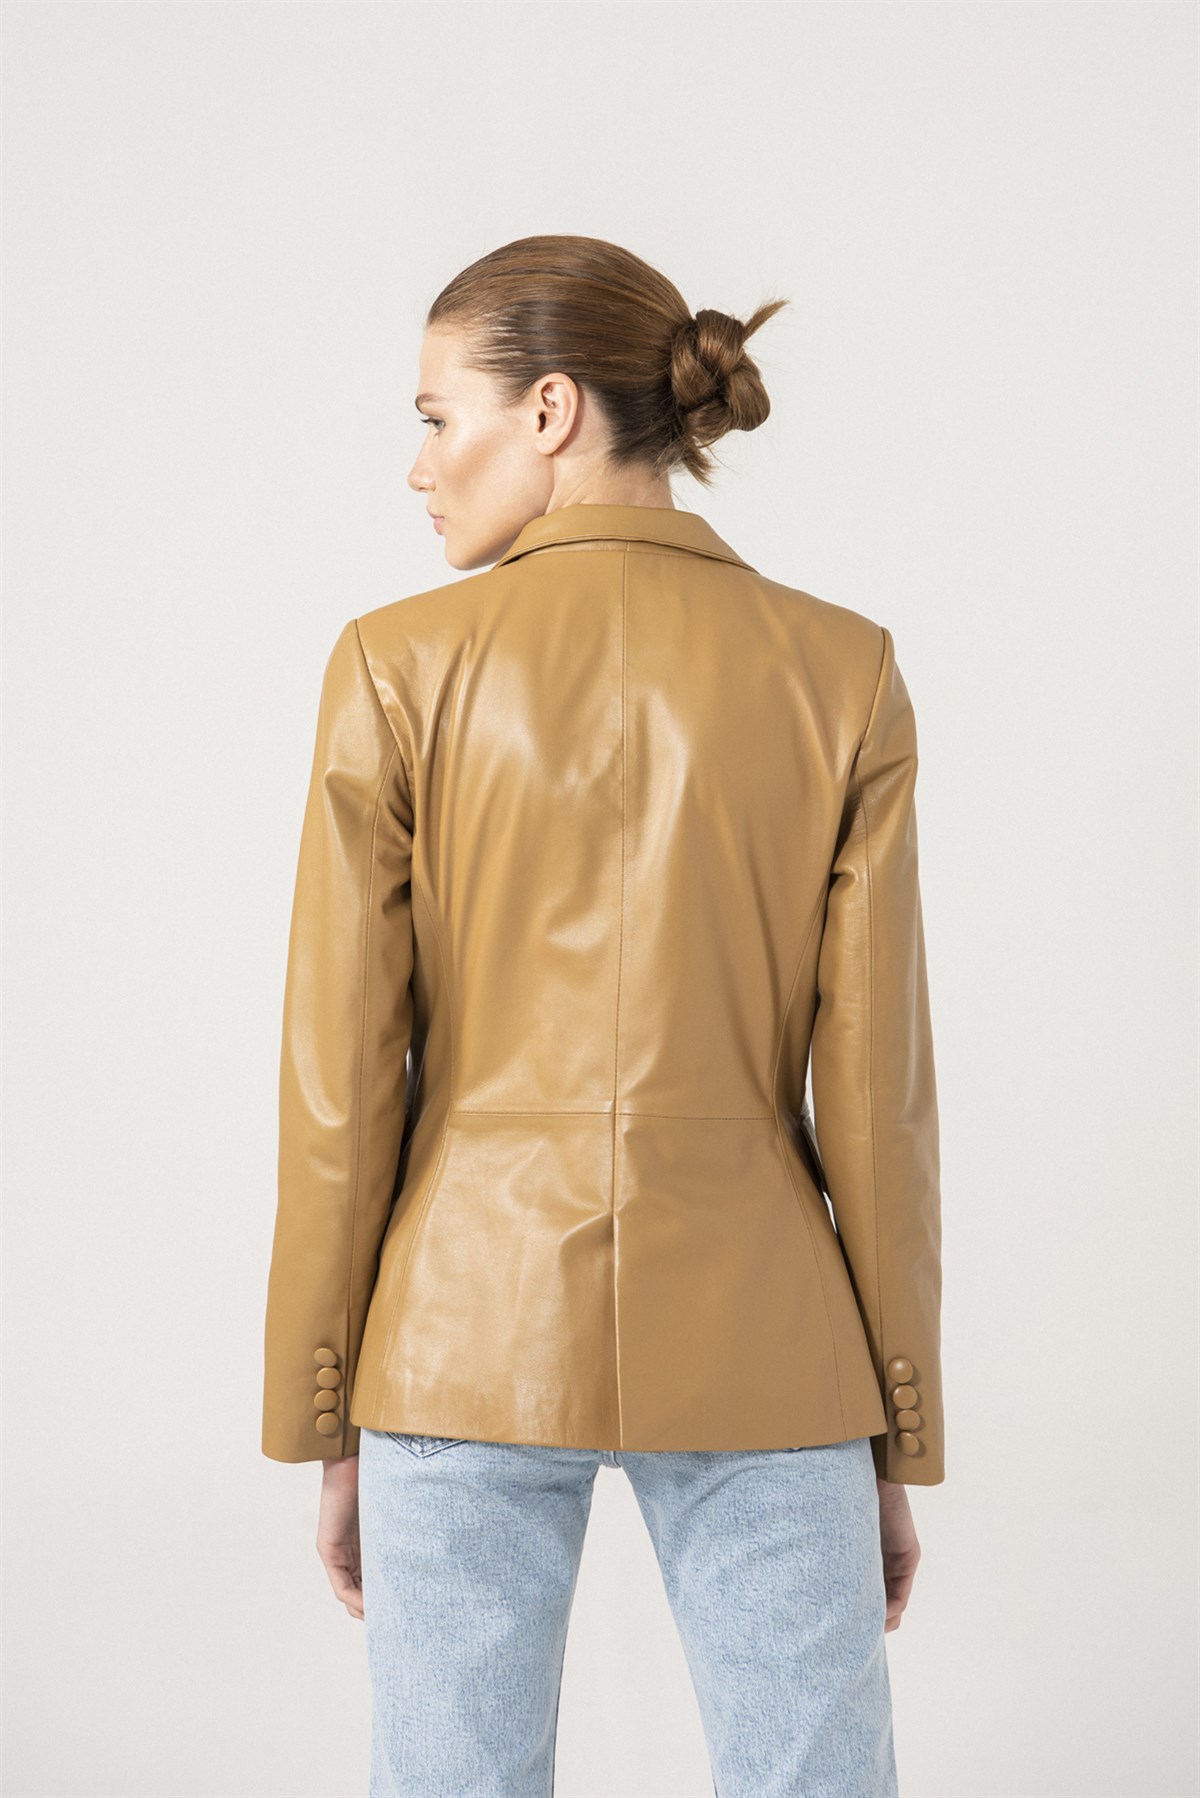 Brown 36                  EU WOMEN FASHION Jackets Blazer Leatherette Zanini blazer discount 87% 